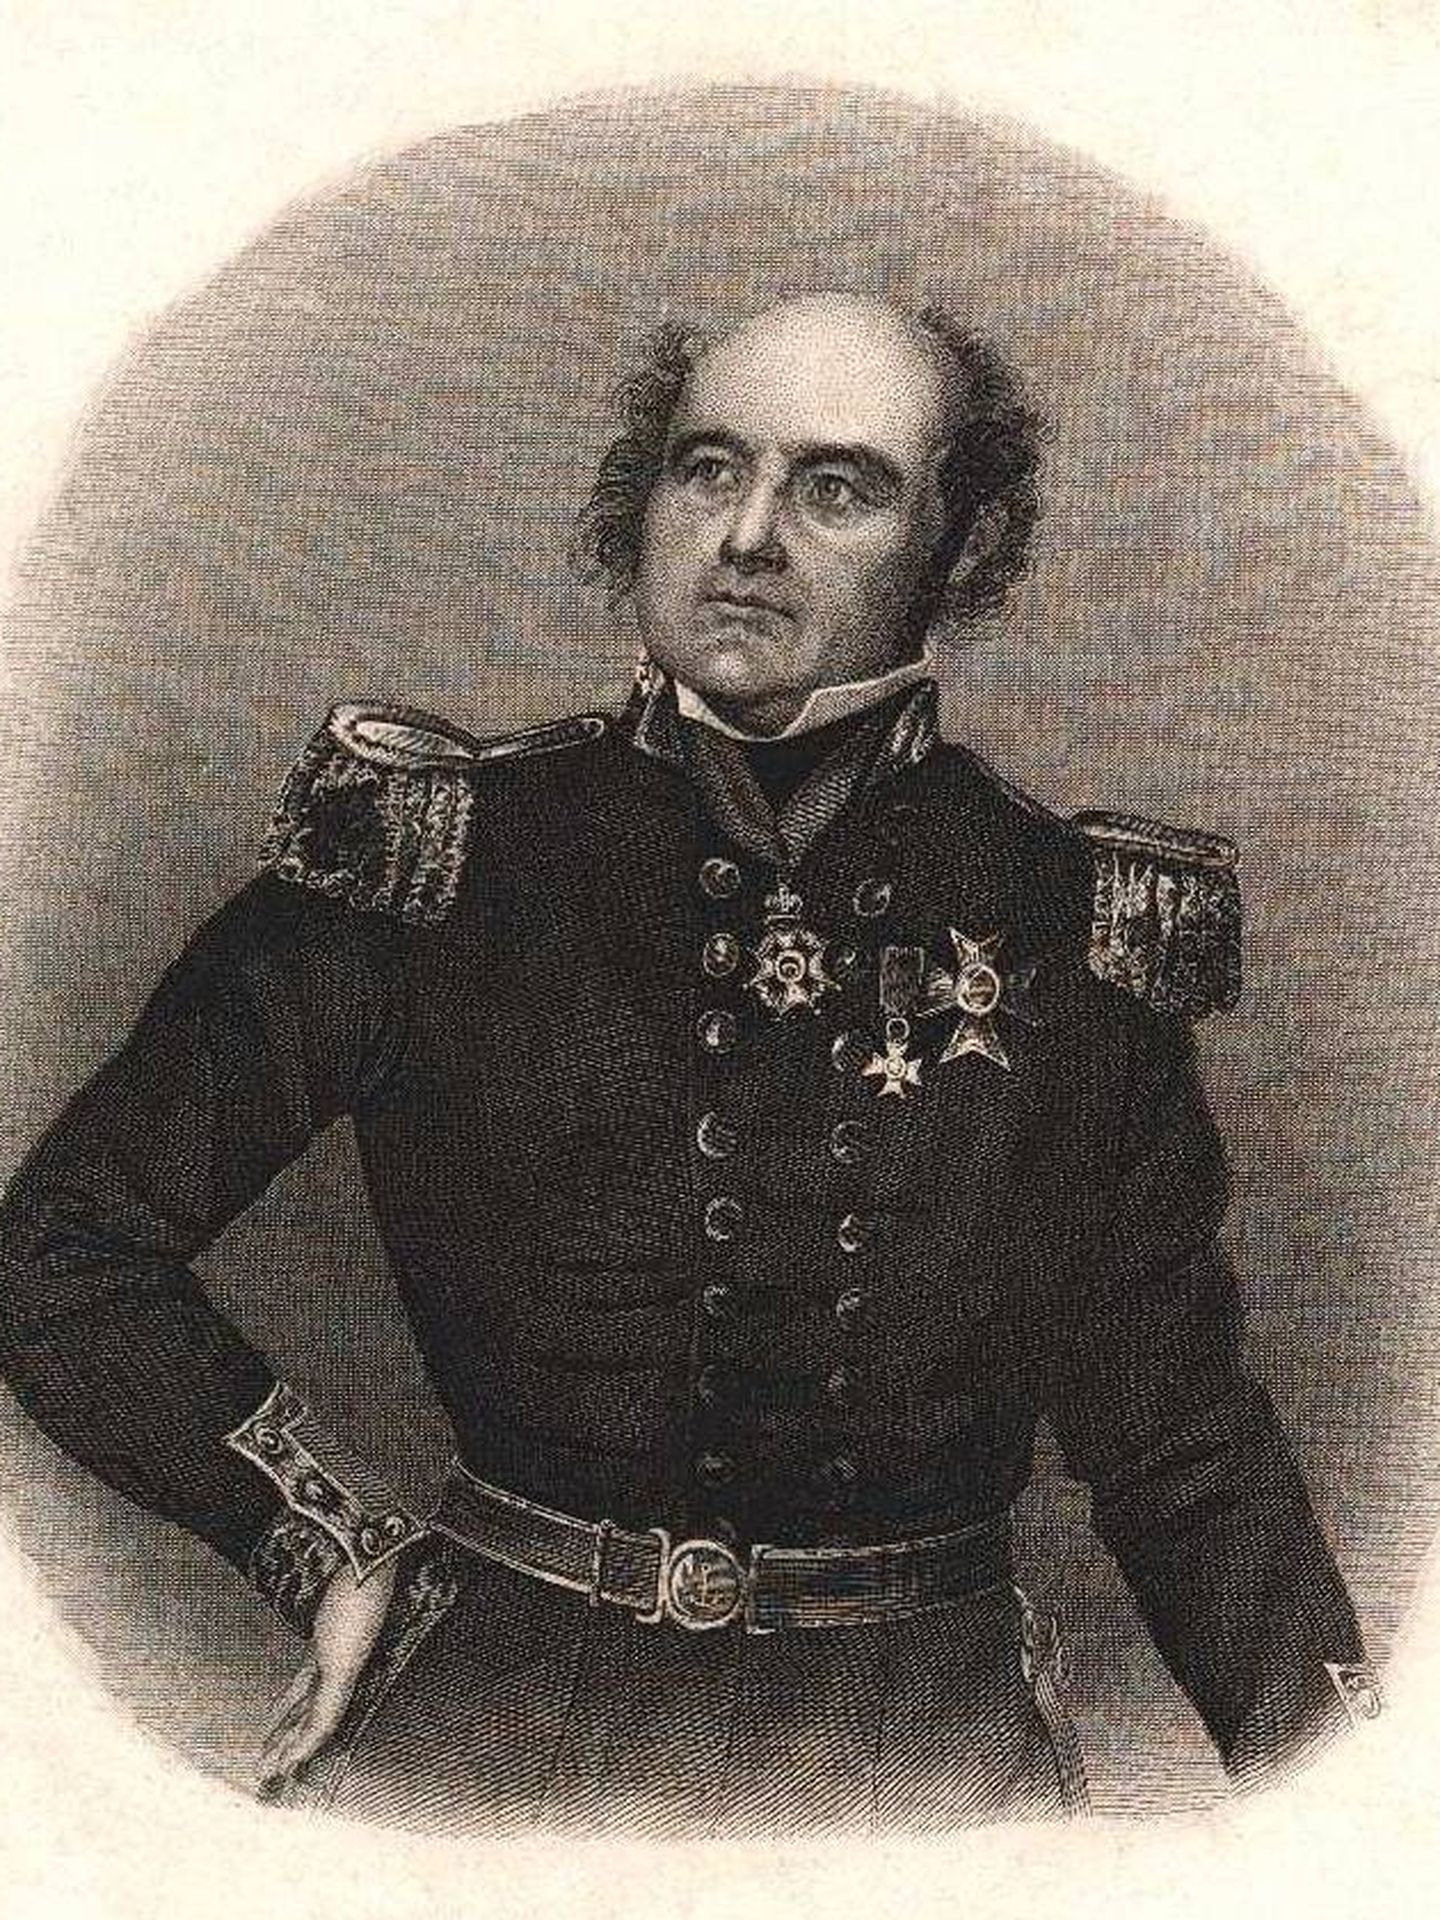 El capitán John Franklin. (Wikimedia Commons)